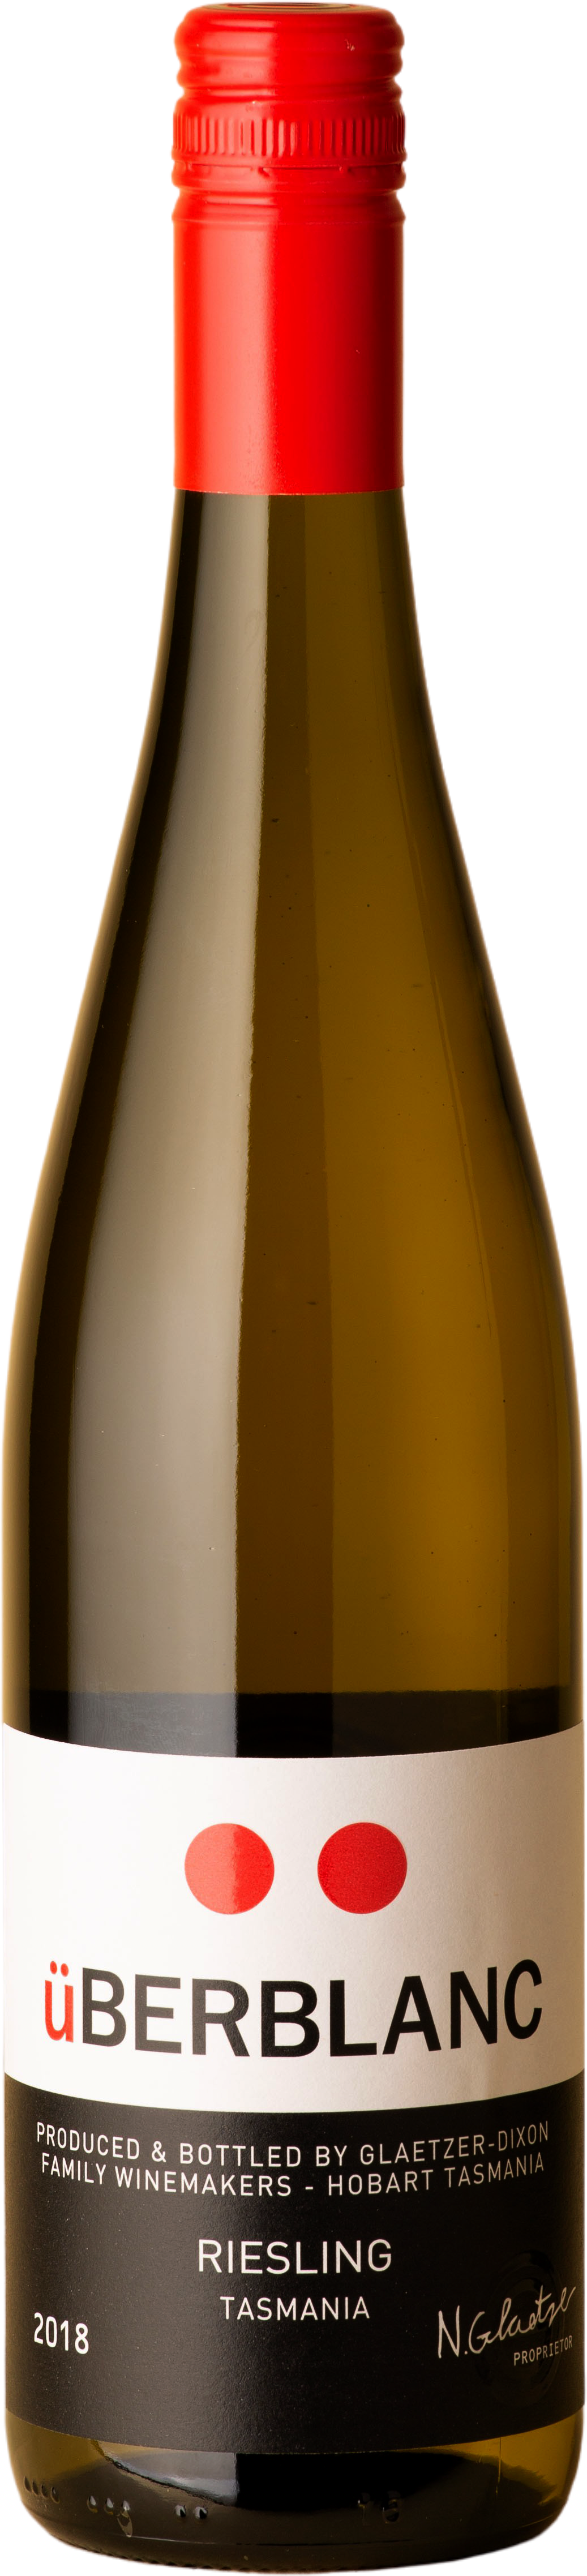 Glaetzer-Dixon - Überblanc Riesling 2018 White Wine